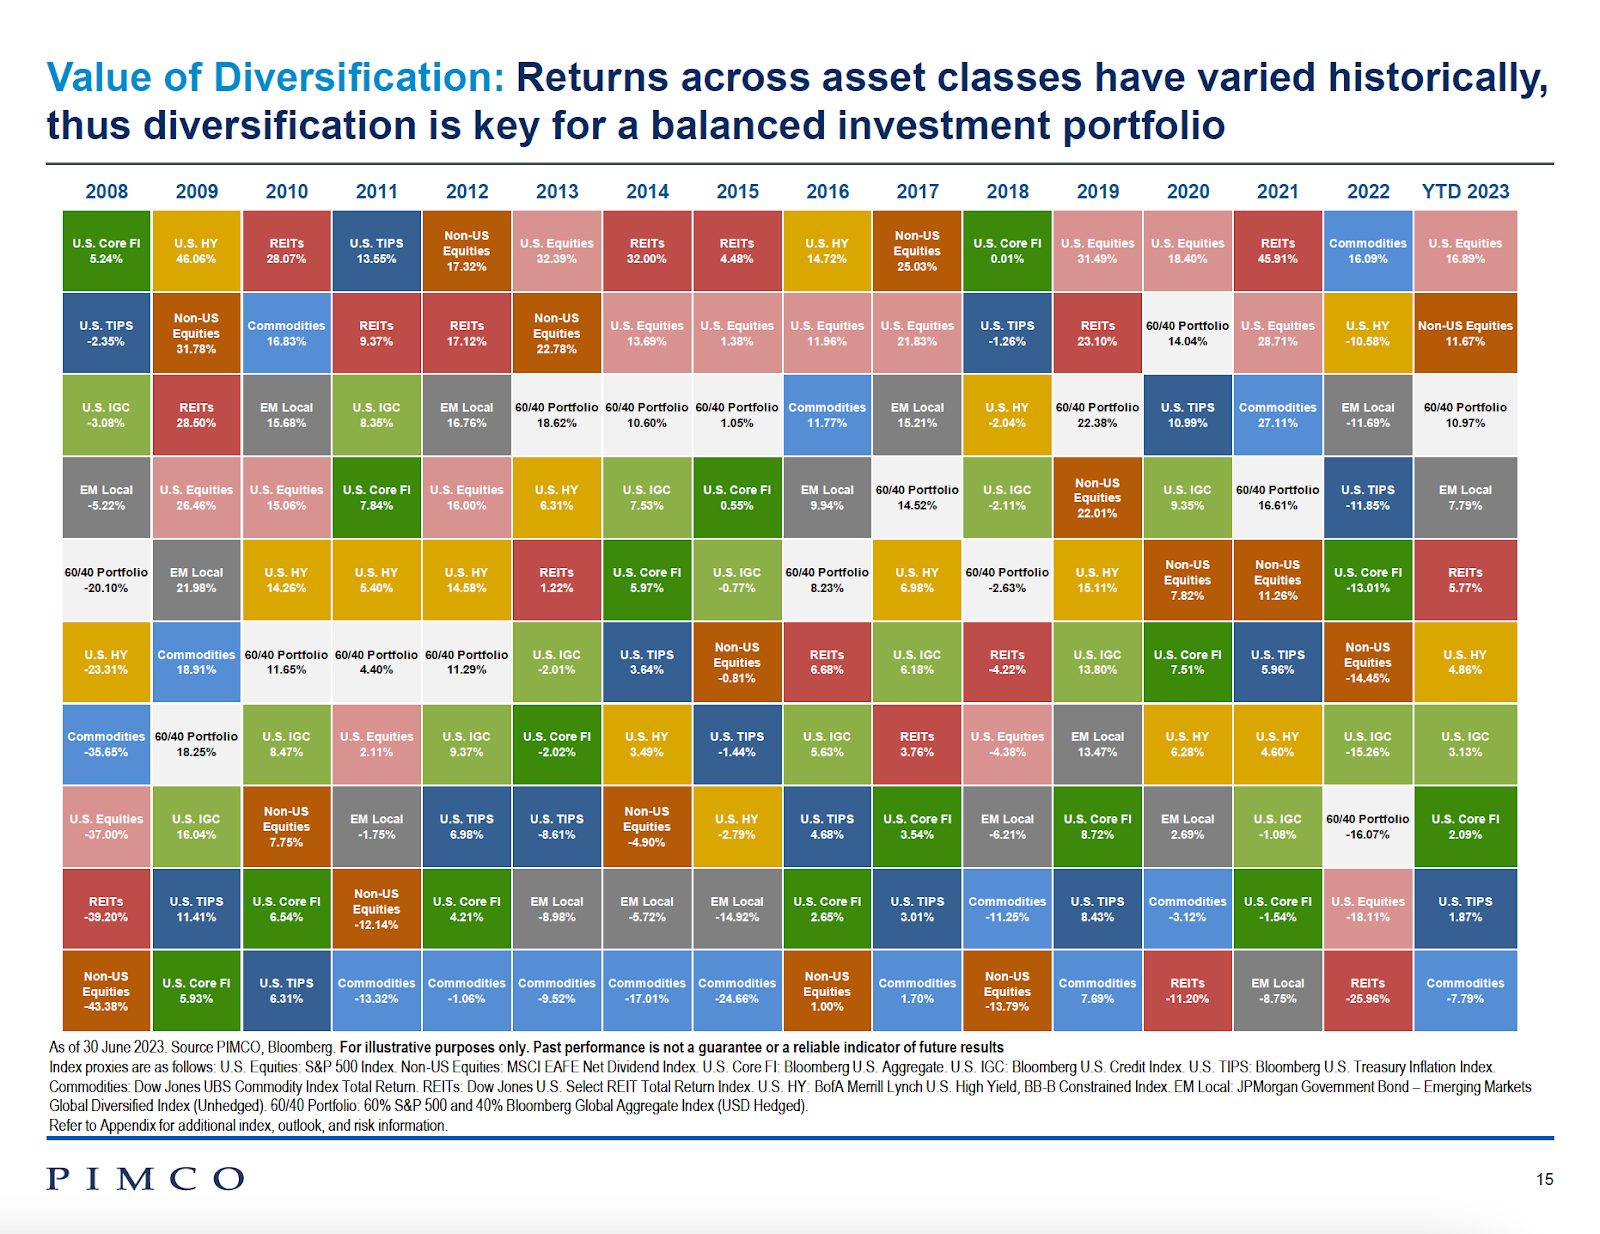 Bonds offer diversification 